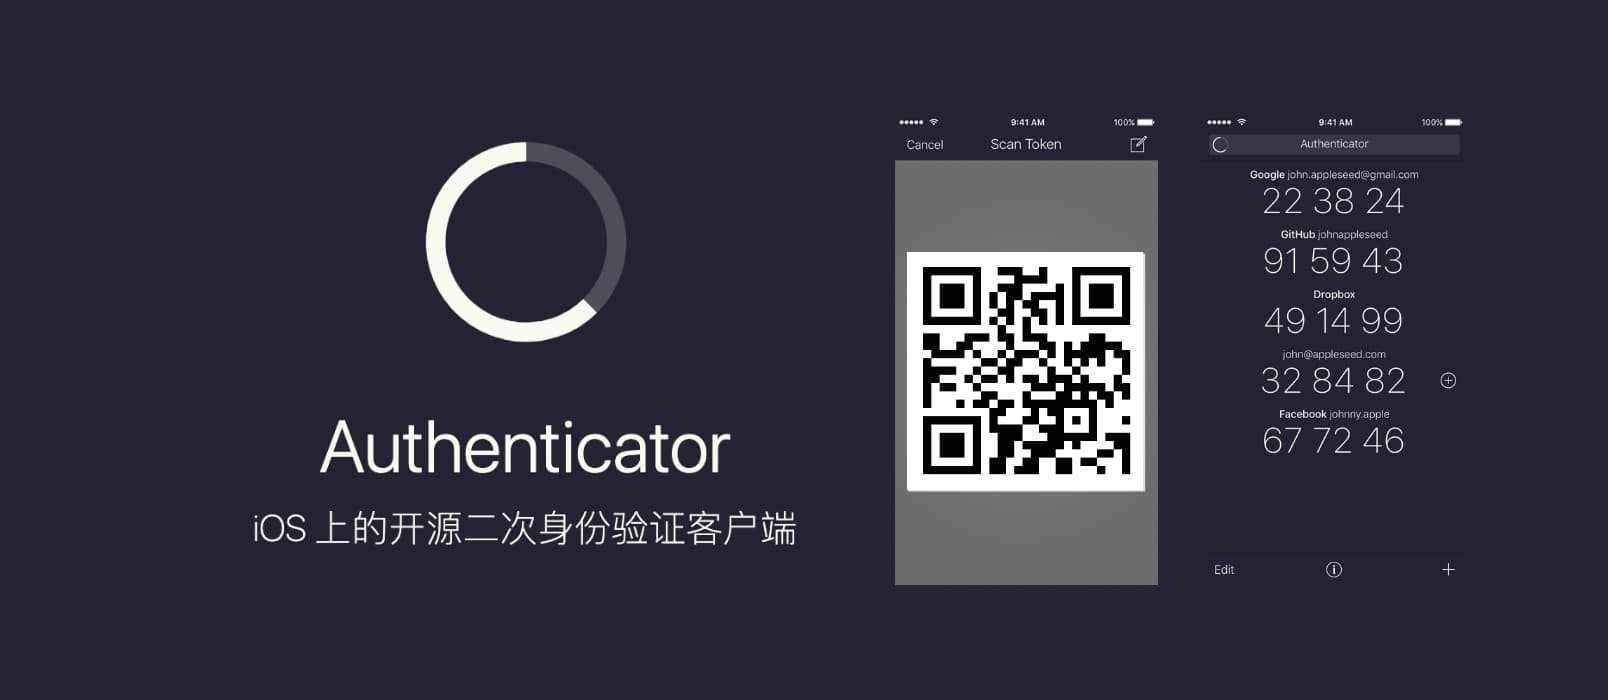 Authenticator - 开源二次验证客户端[iPhone] 1